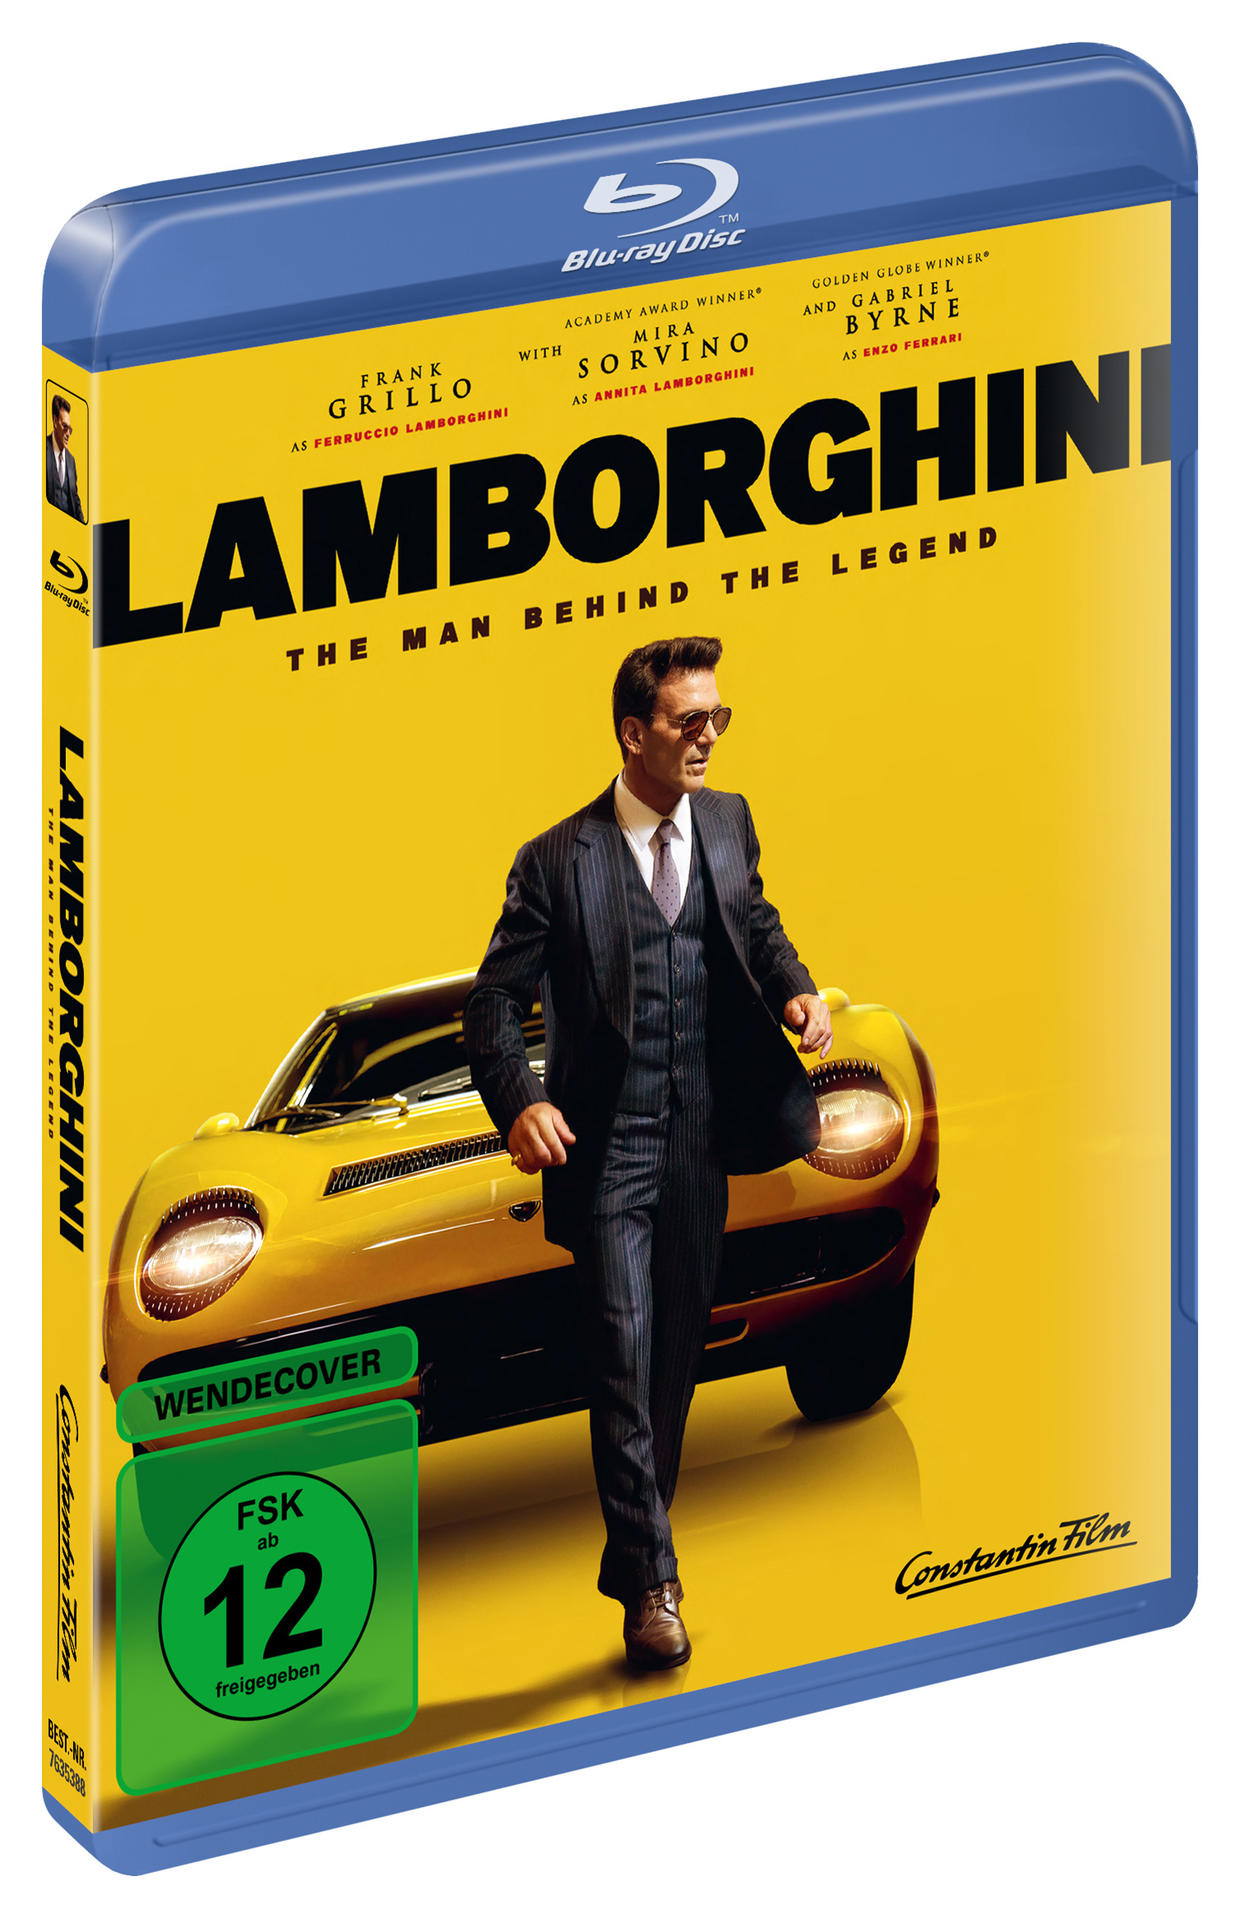 The Behind Blu-ray Man the Lamborghini: Legend